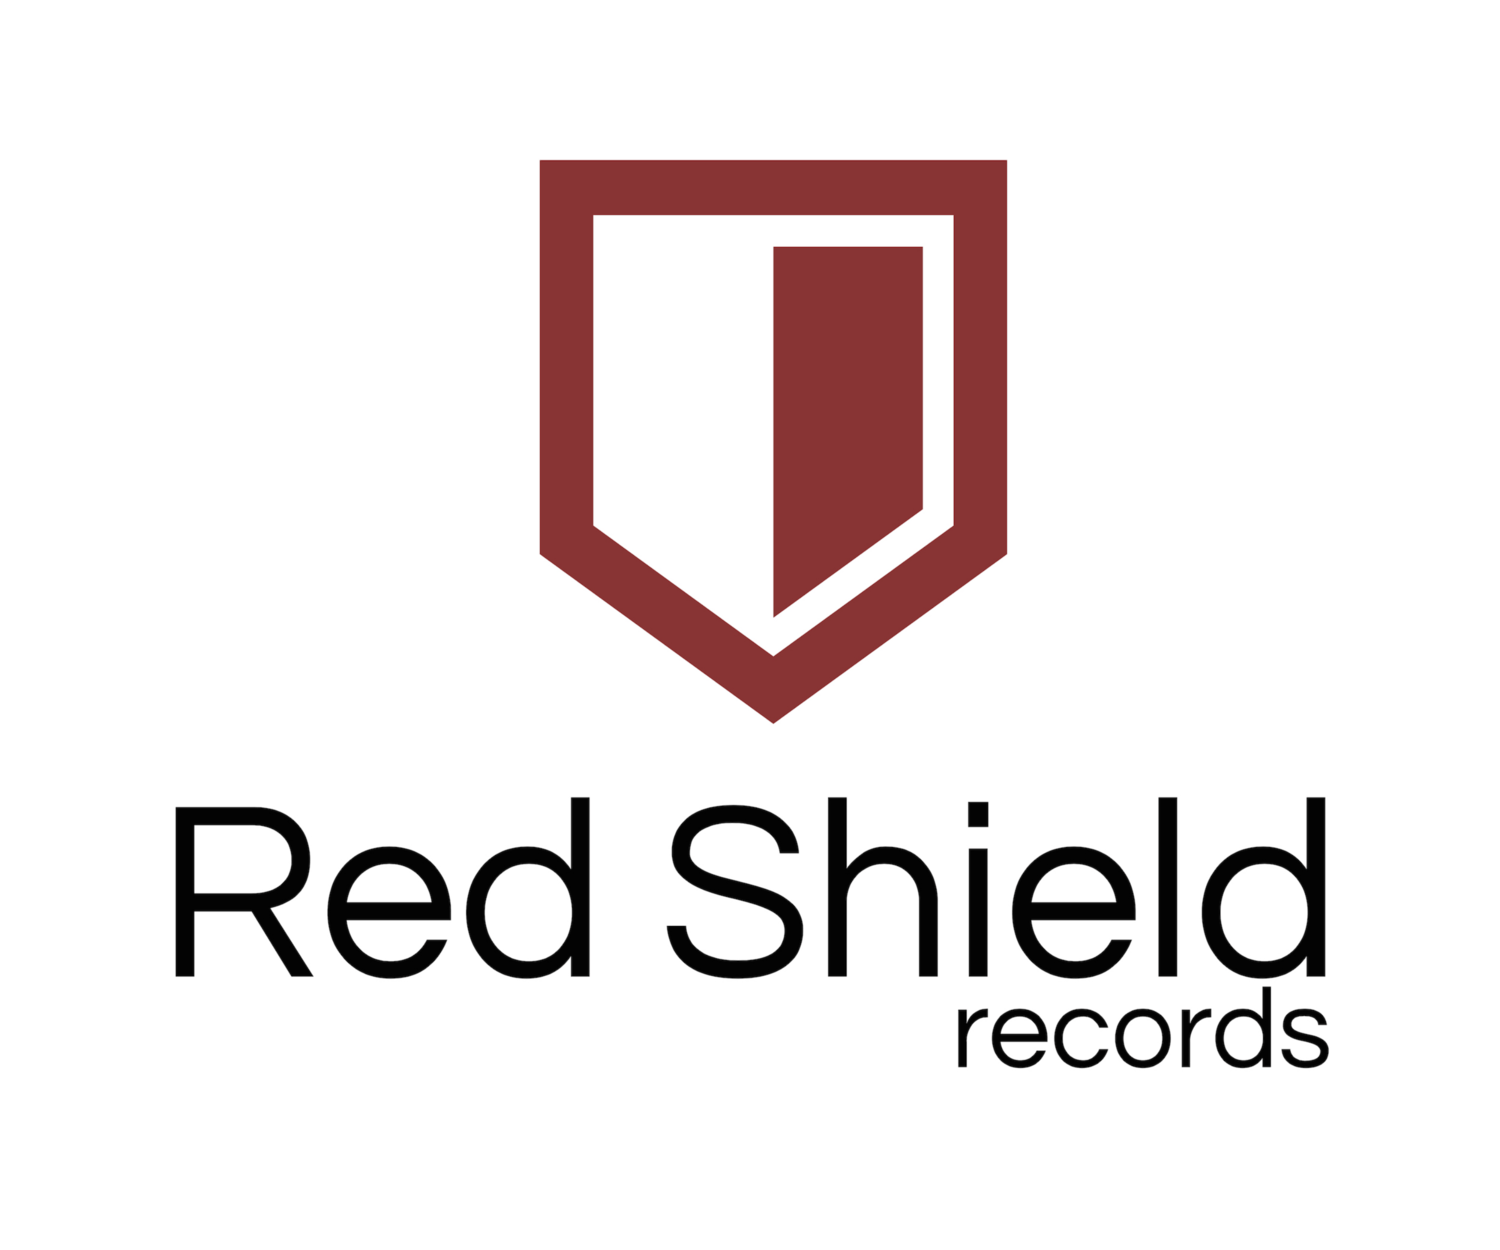 Red Shield in Automotive Industry Logo - Red Shield Music Amalgama